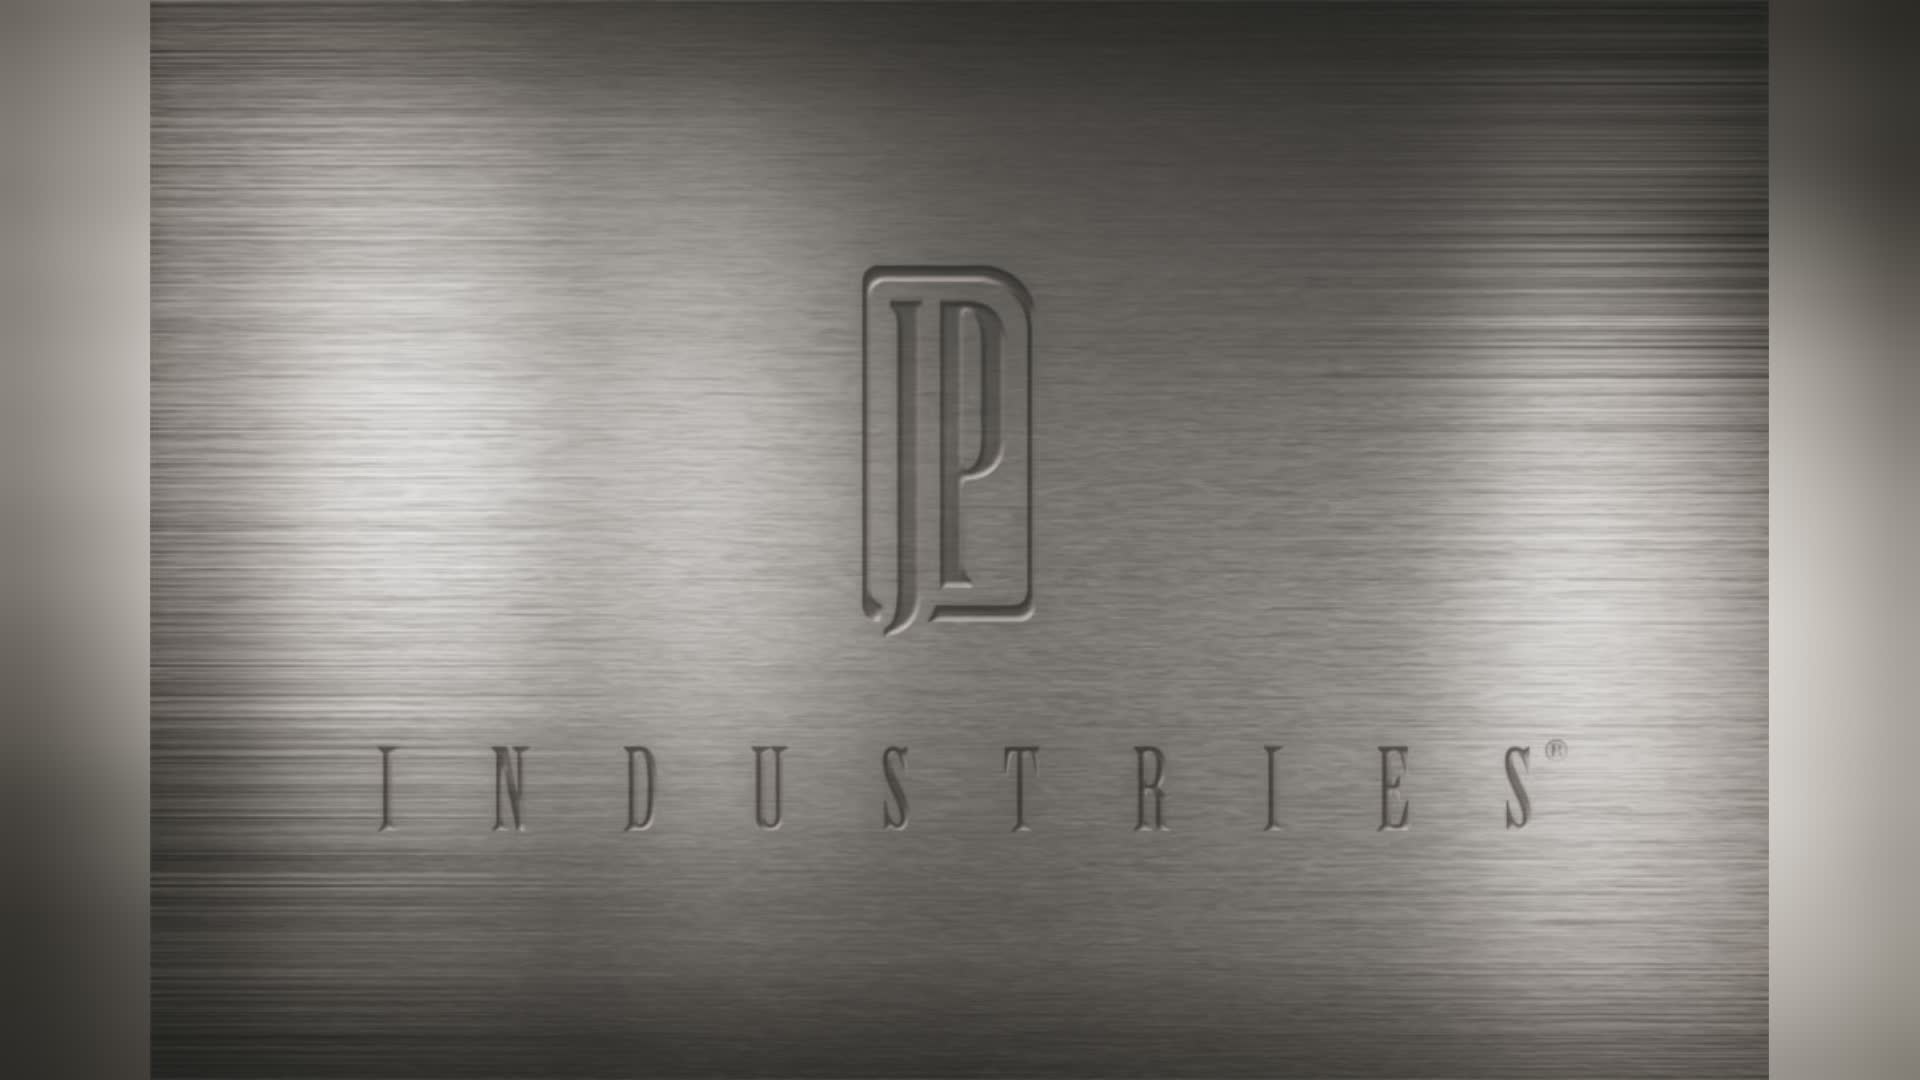 Sentenza di fallimento per Jp Industries. Udienza 18 marzo